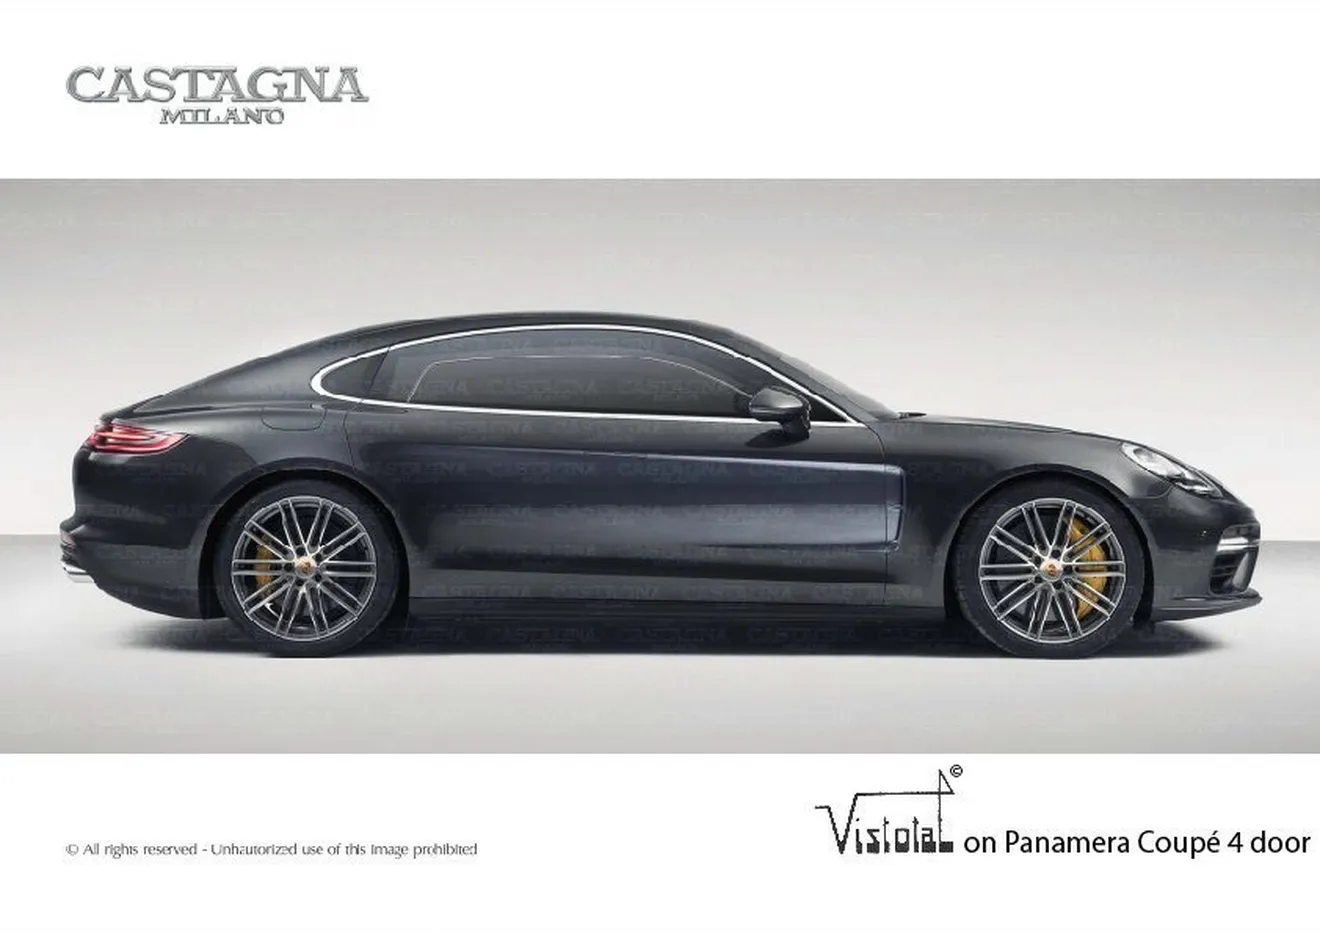 El Porsche Panamera Coupé cobra vida en los talleres de Castagna Milano